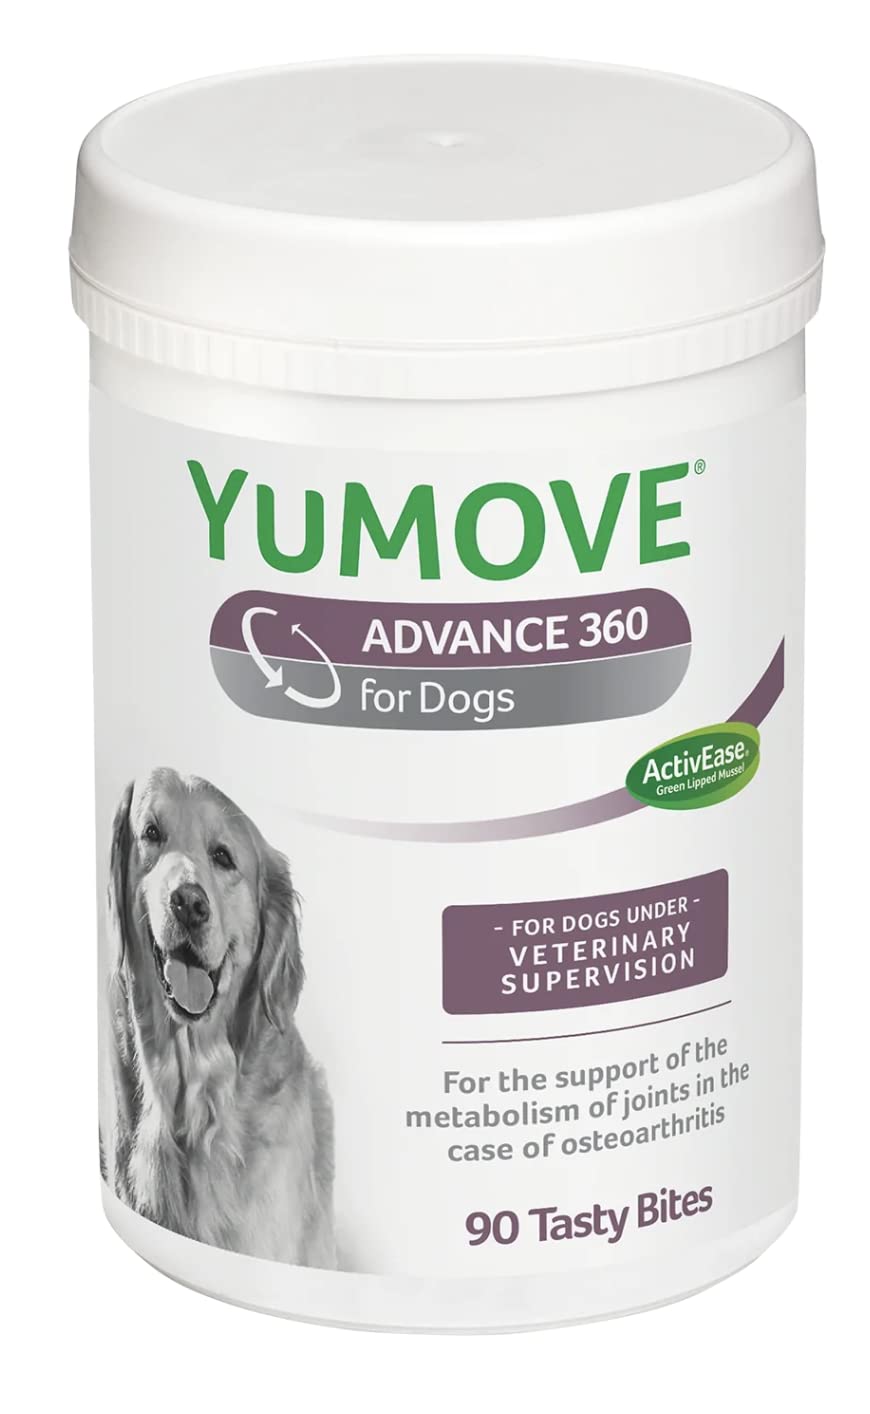 Yumove Advance 360 for Dogs x 90 Tasty Bites